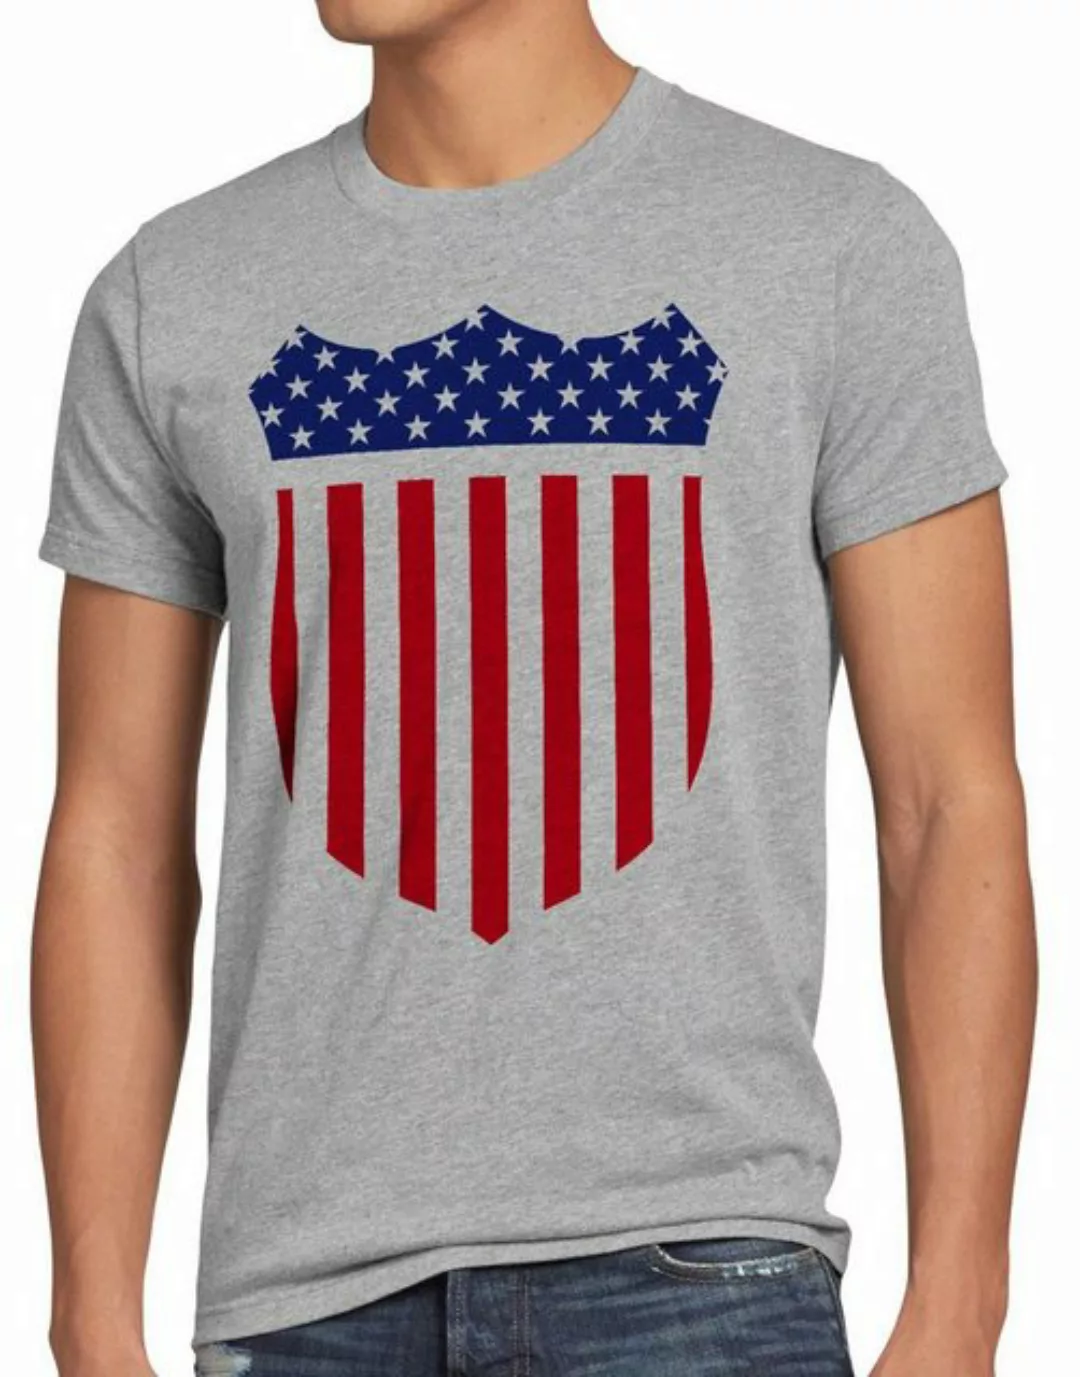 style3 Print-Shirt Herren T-Shirt USA Amerika Medal Medaille Wappen Flagge günstig online kaufen